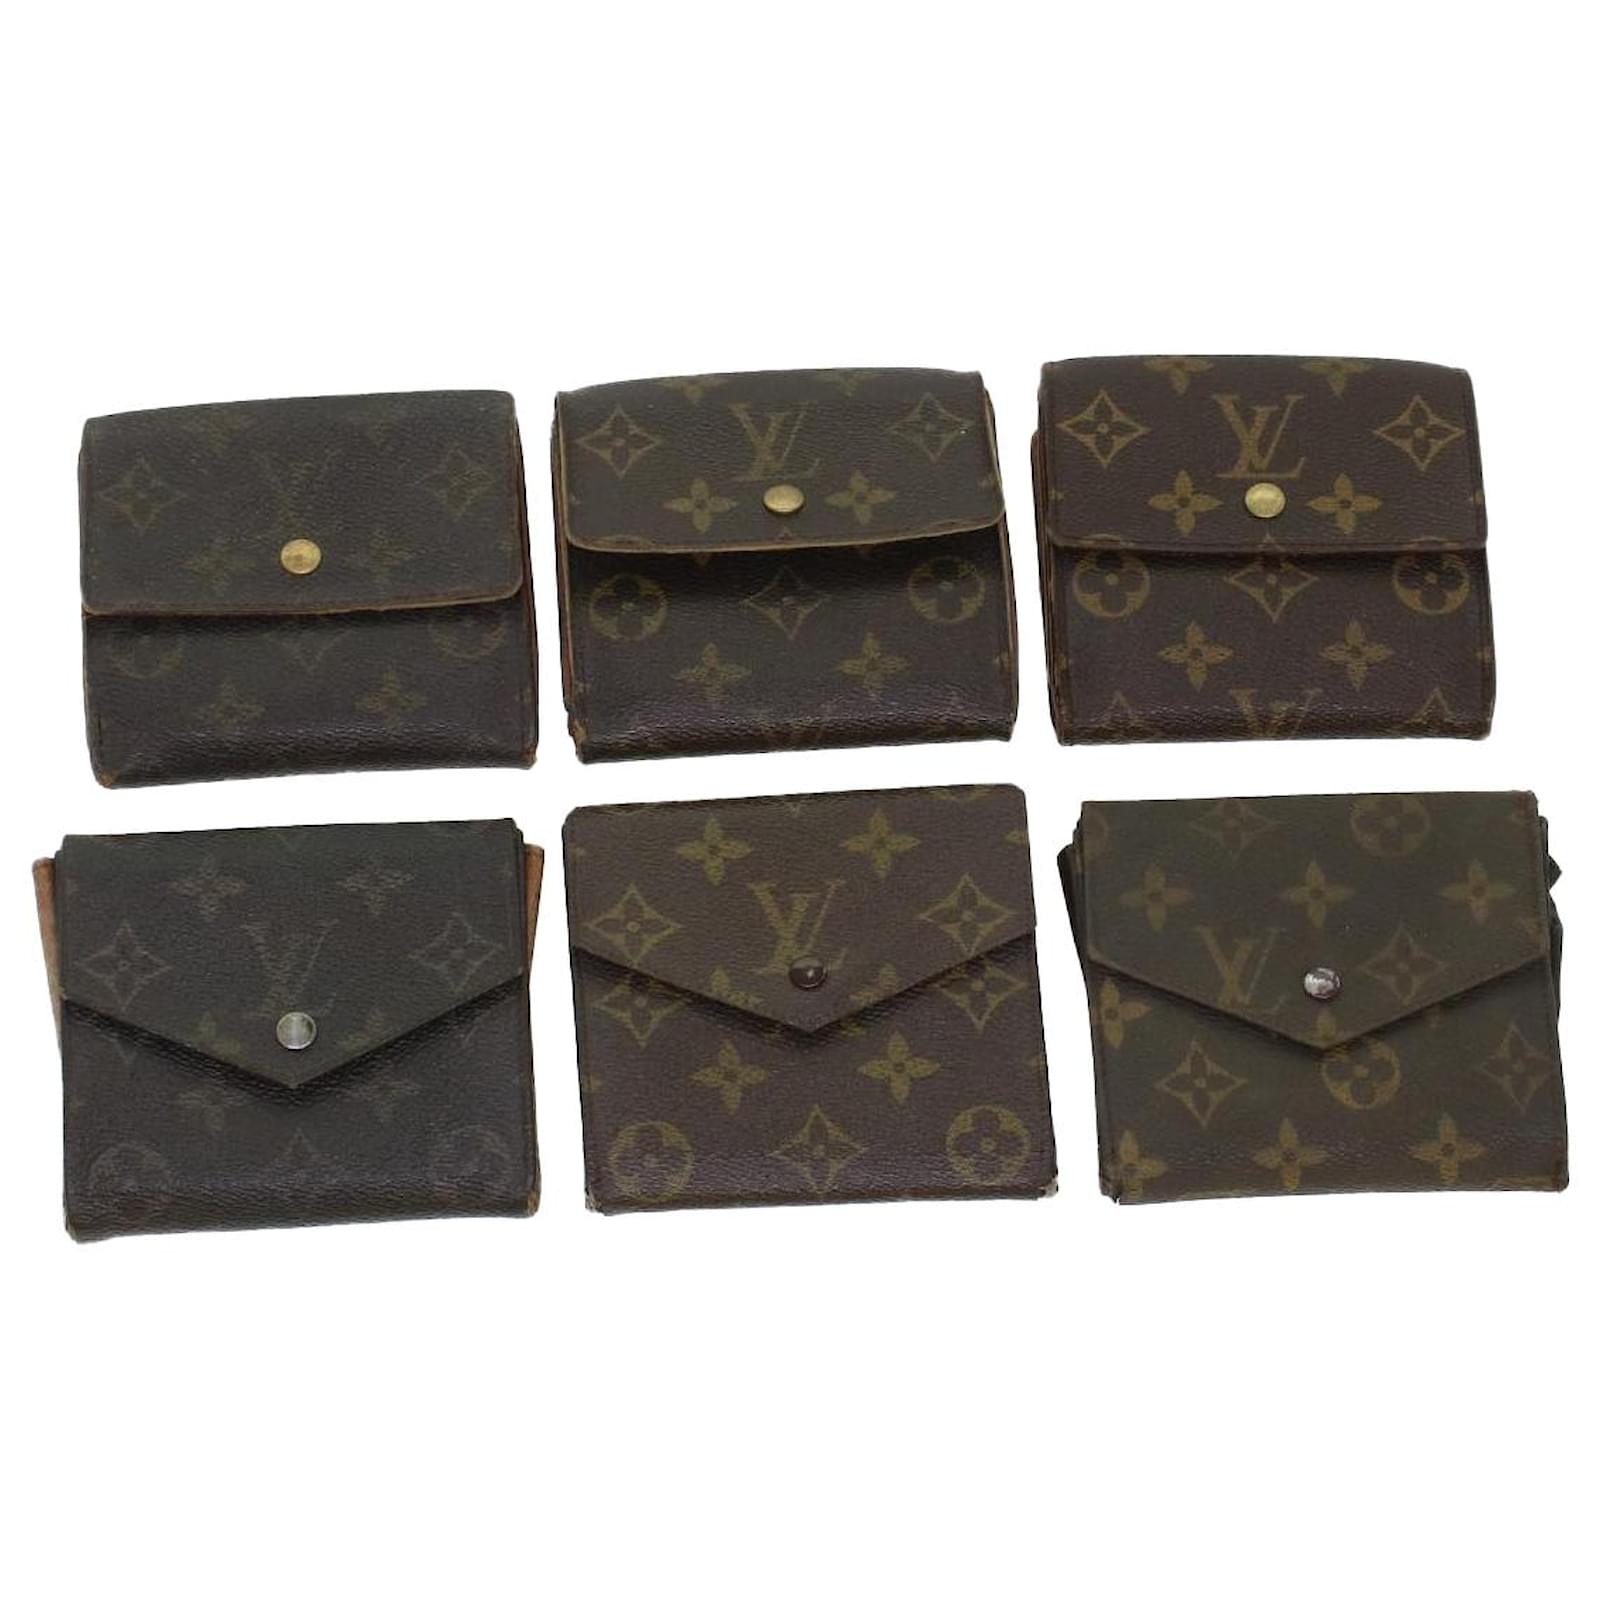 Vintage Louis Vuitton Wallet With Box